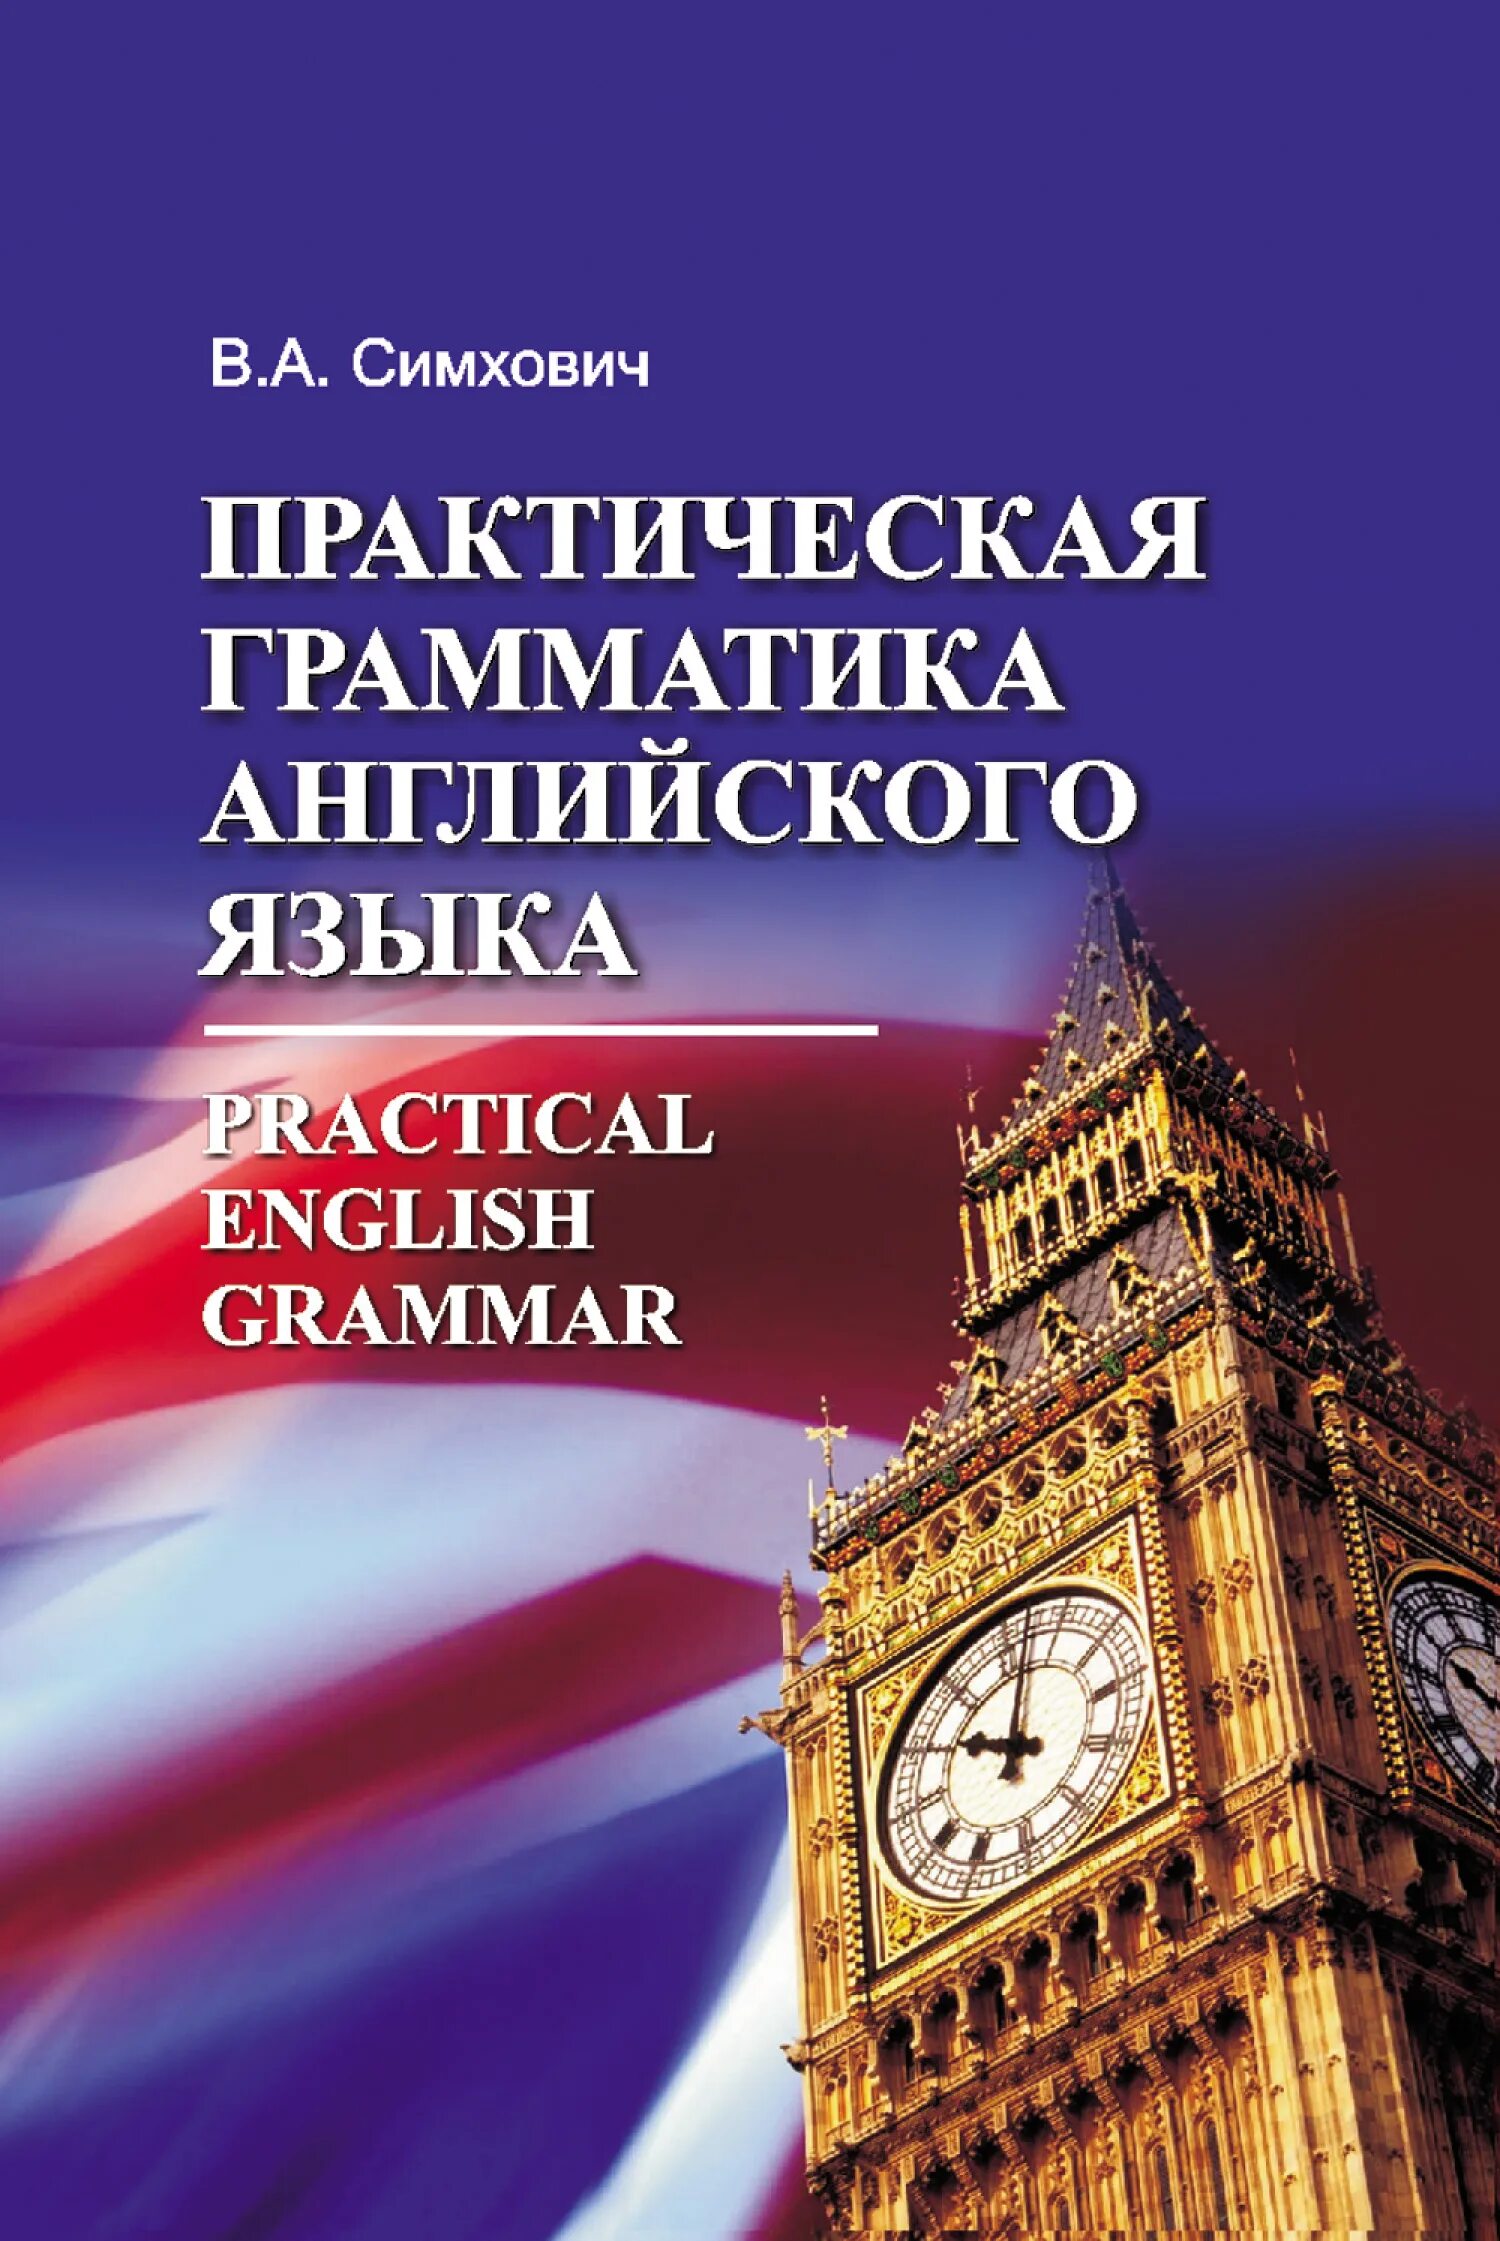 Грамматика английского языка. Книги на английском языке. Грамматика английского языка книга. Практическая грамматика английского языка.